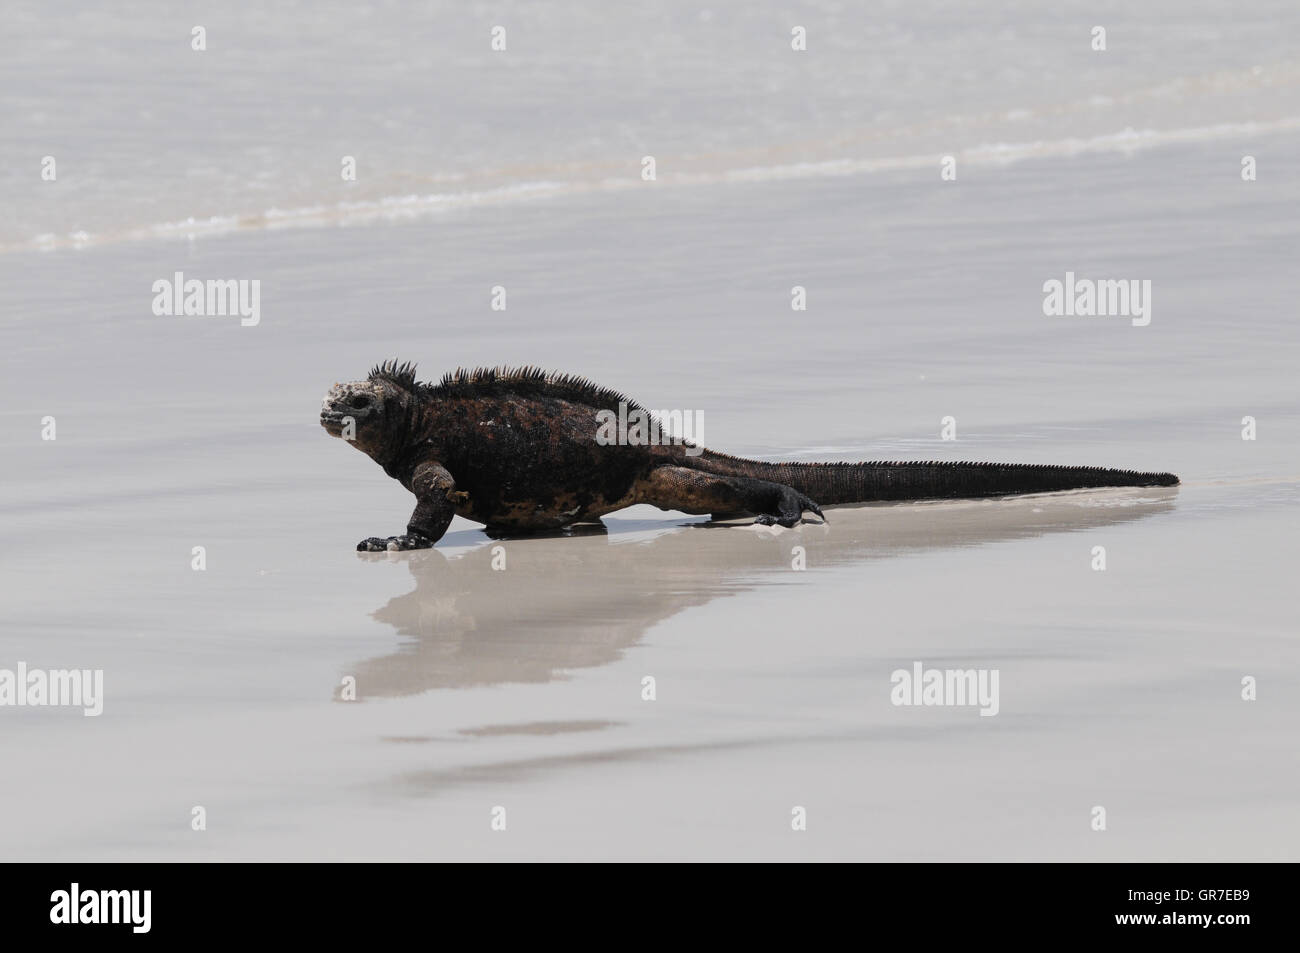 Marine Iguana On The Beach Stock Photo